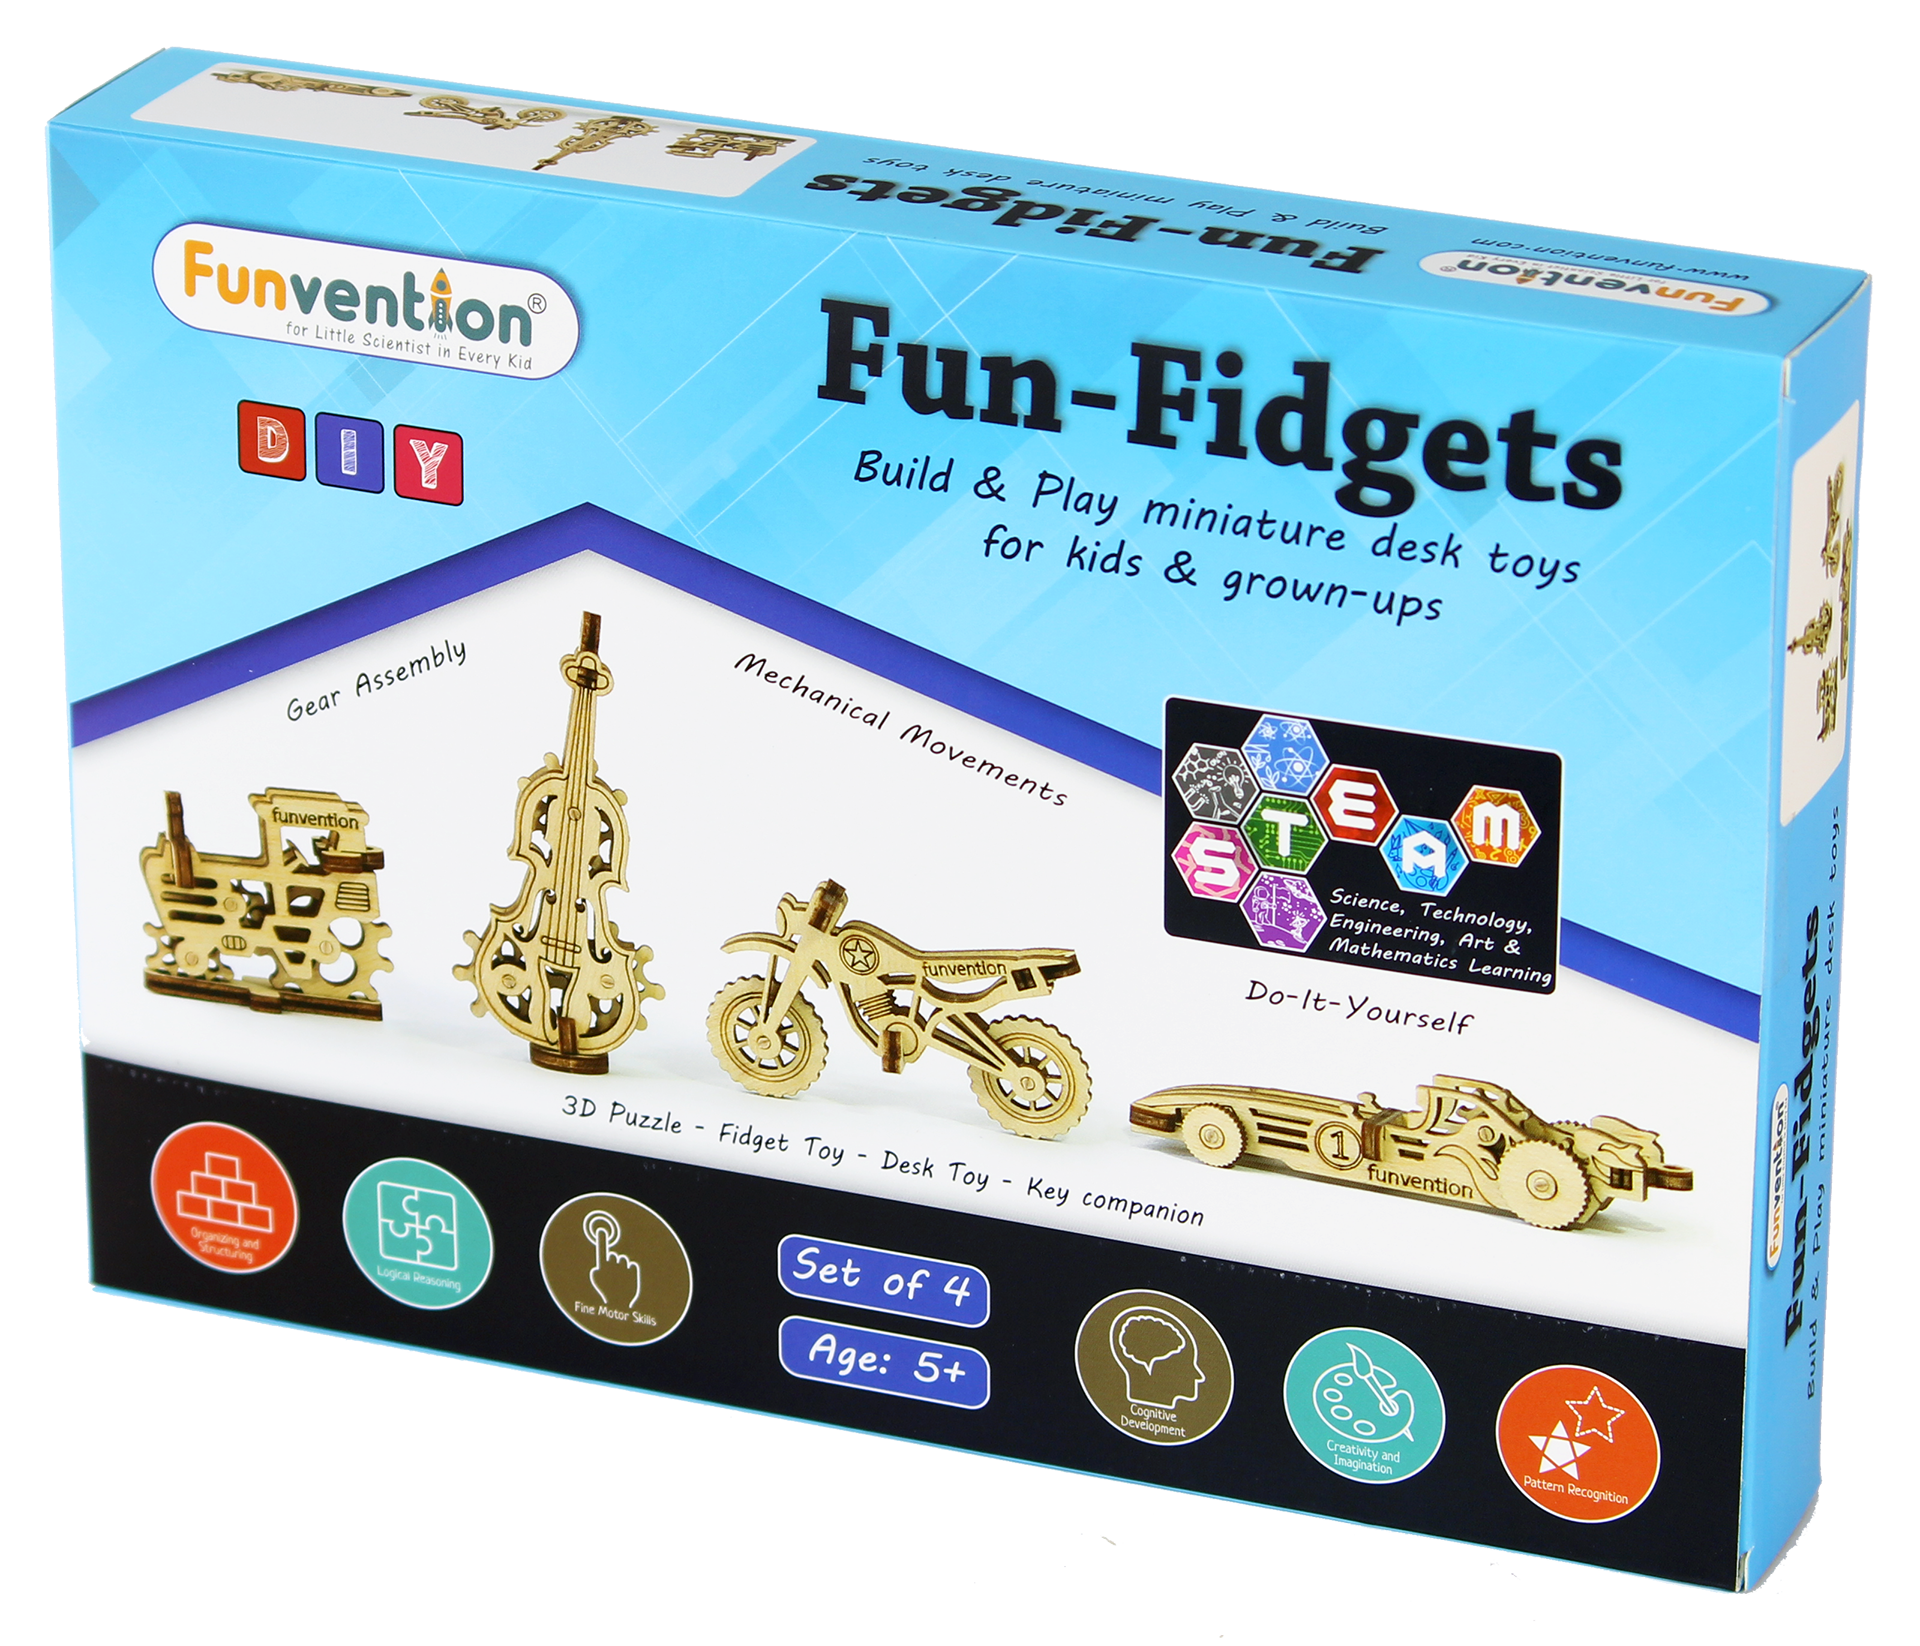 Fun Fidgets - Assorted - 5.Set of 4 Model